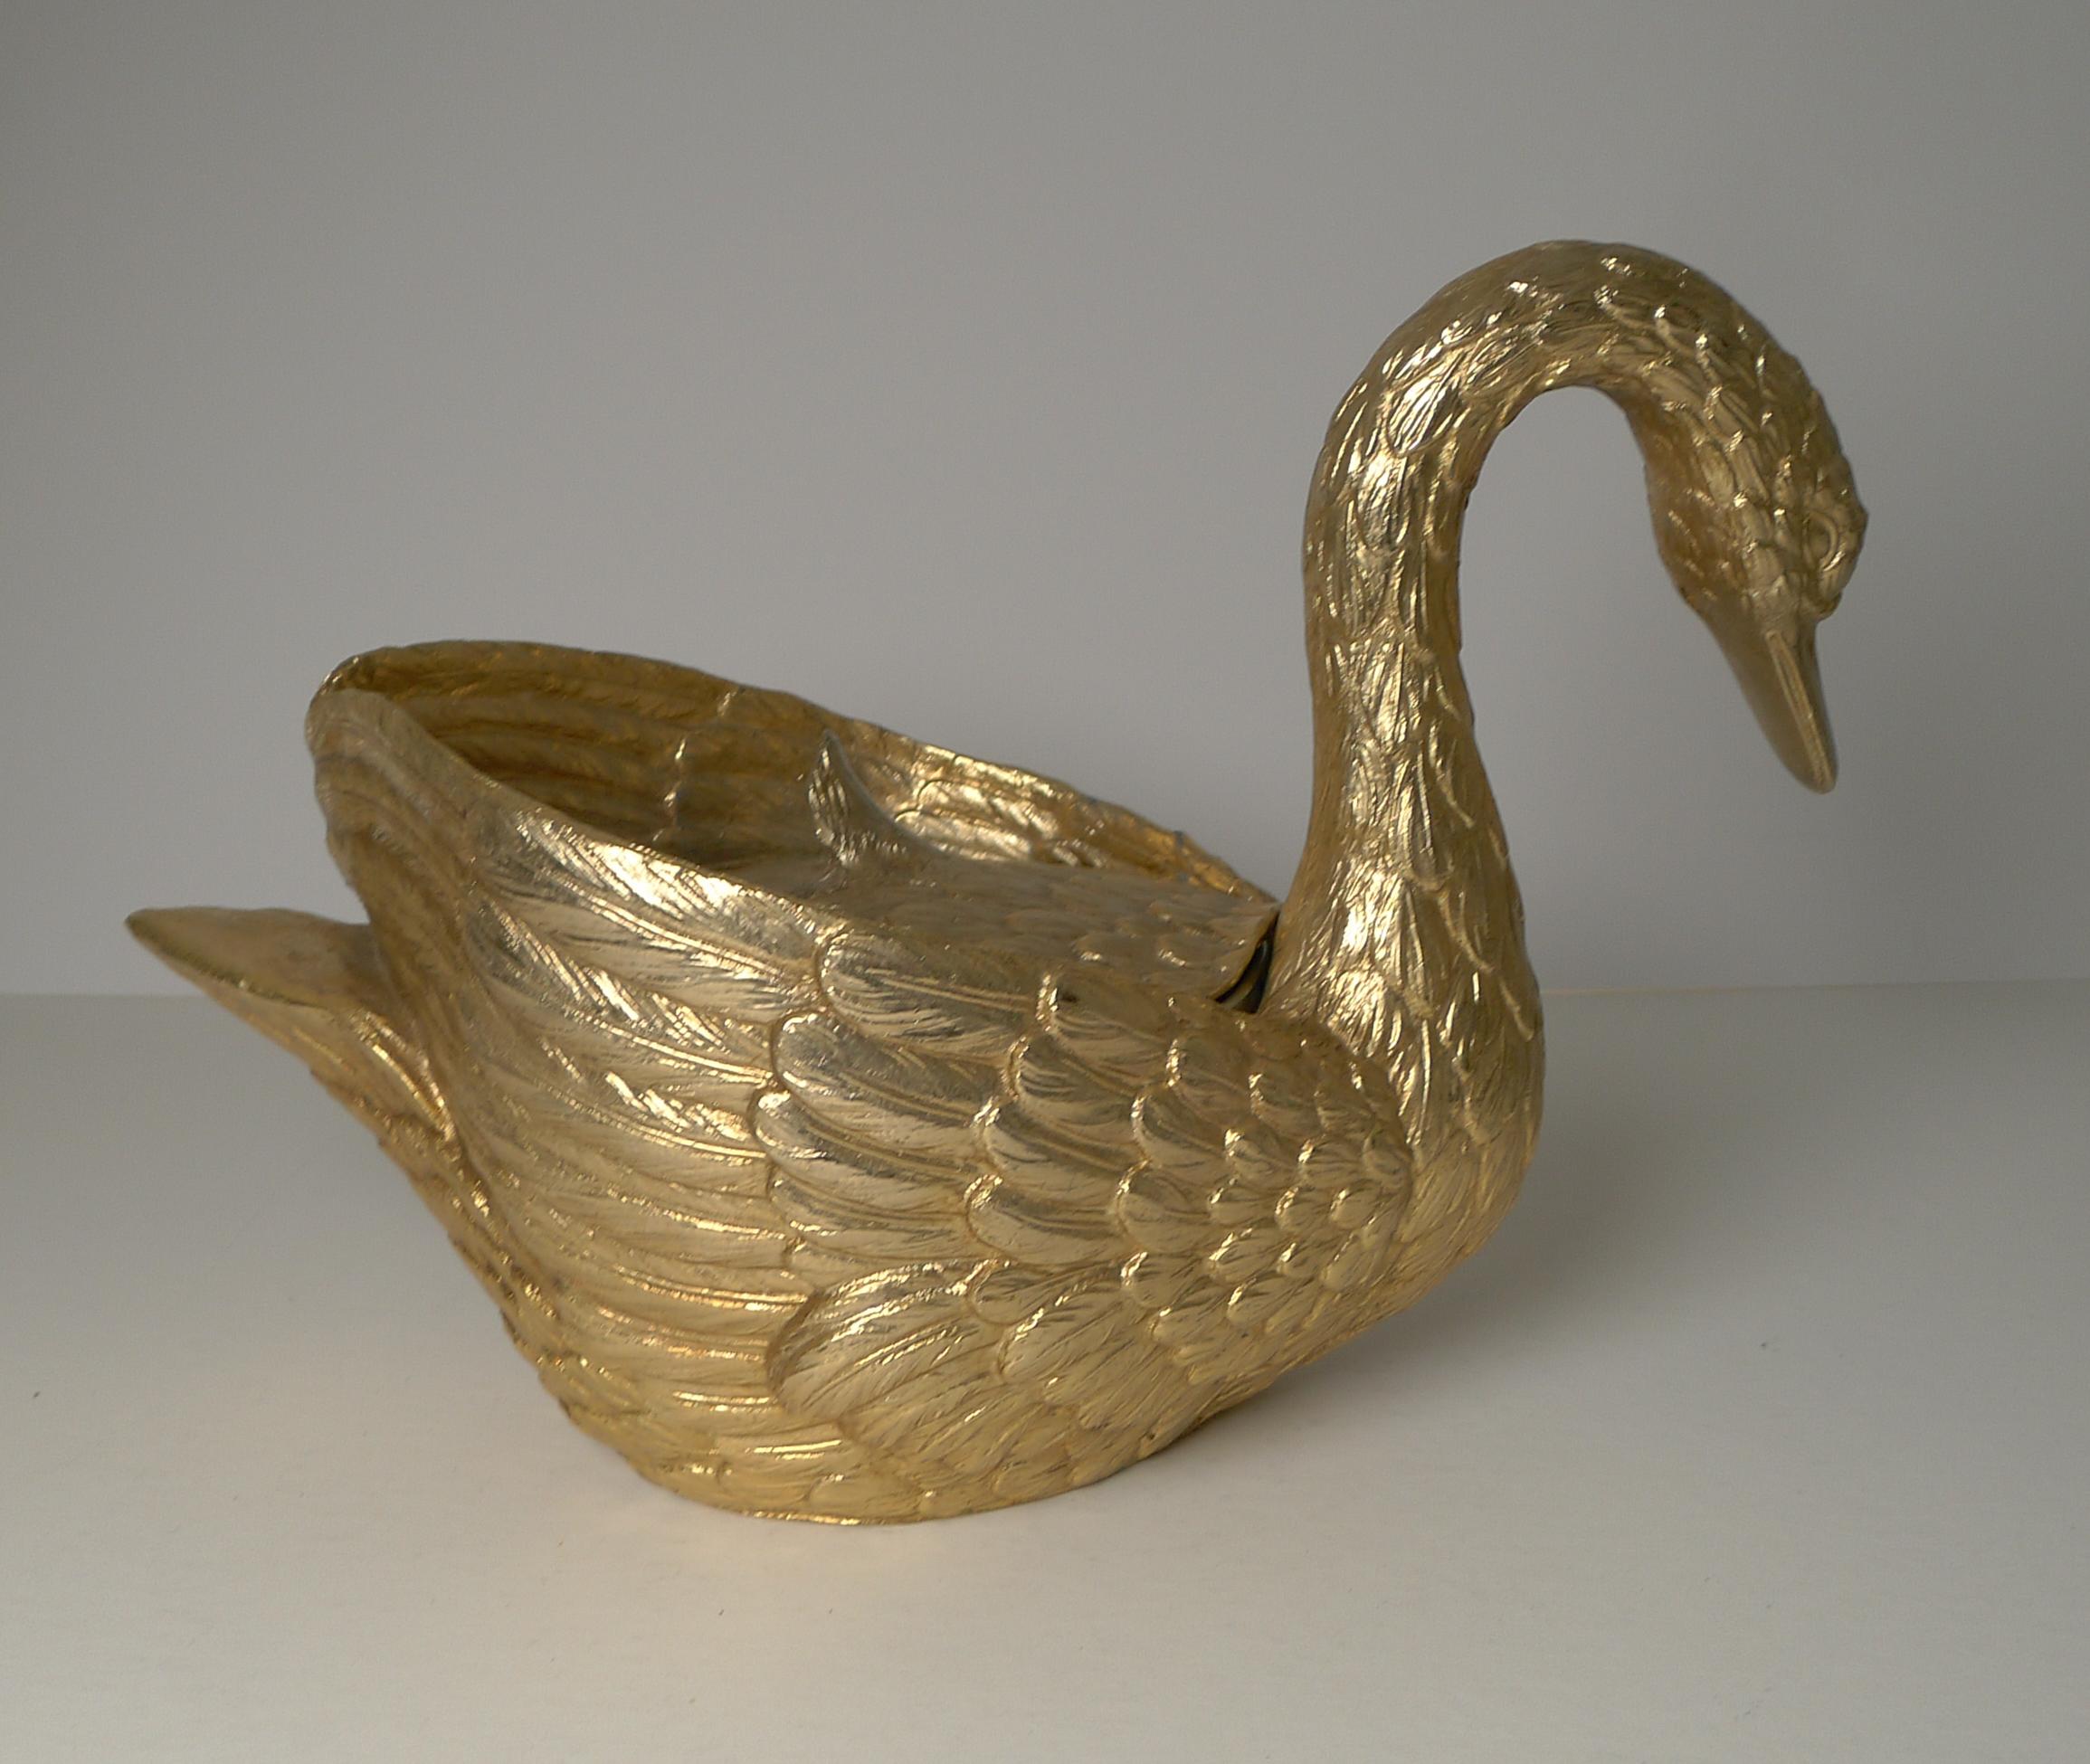 Italian Mauro Manetti, Florence, Italy, Gold Swan Ice Bucket c.1970